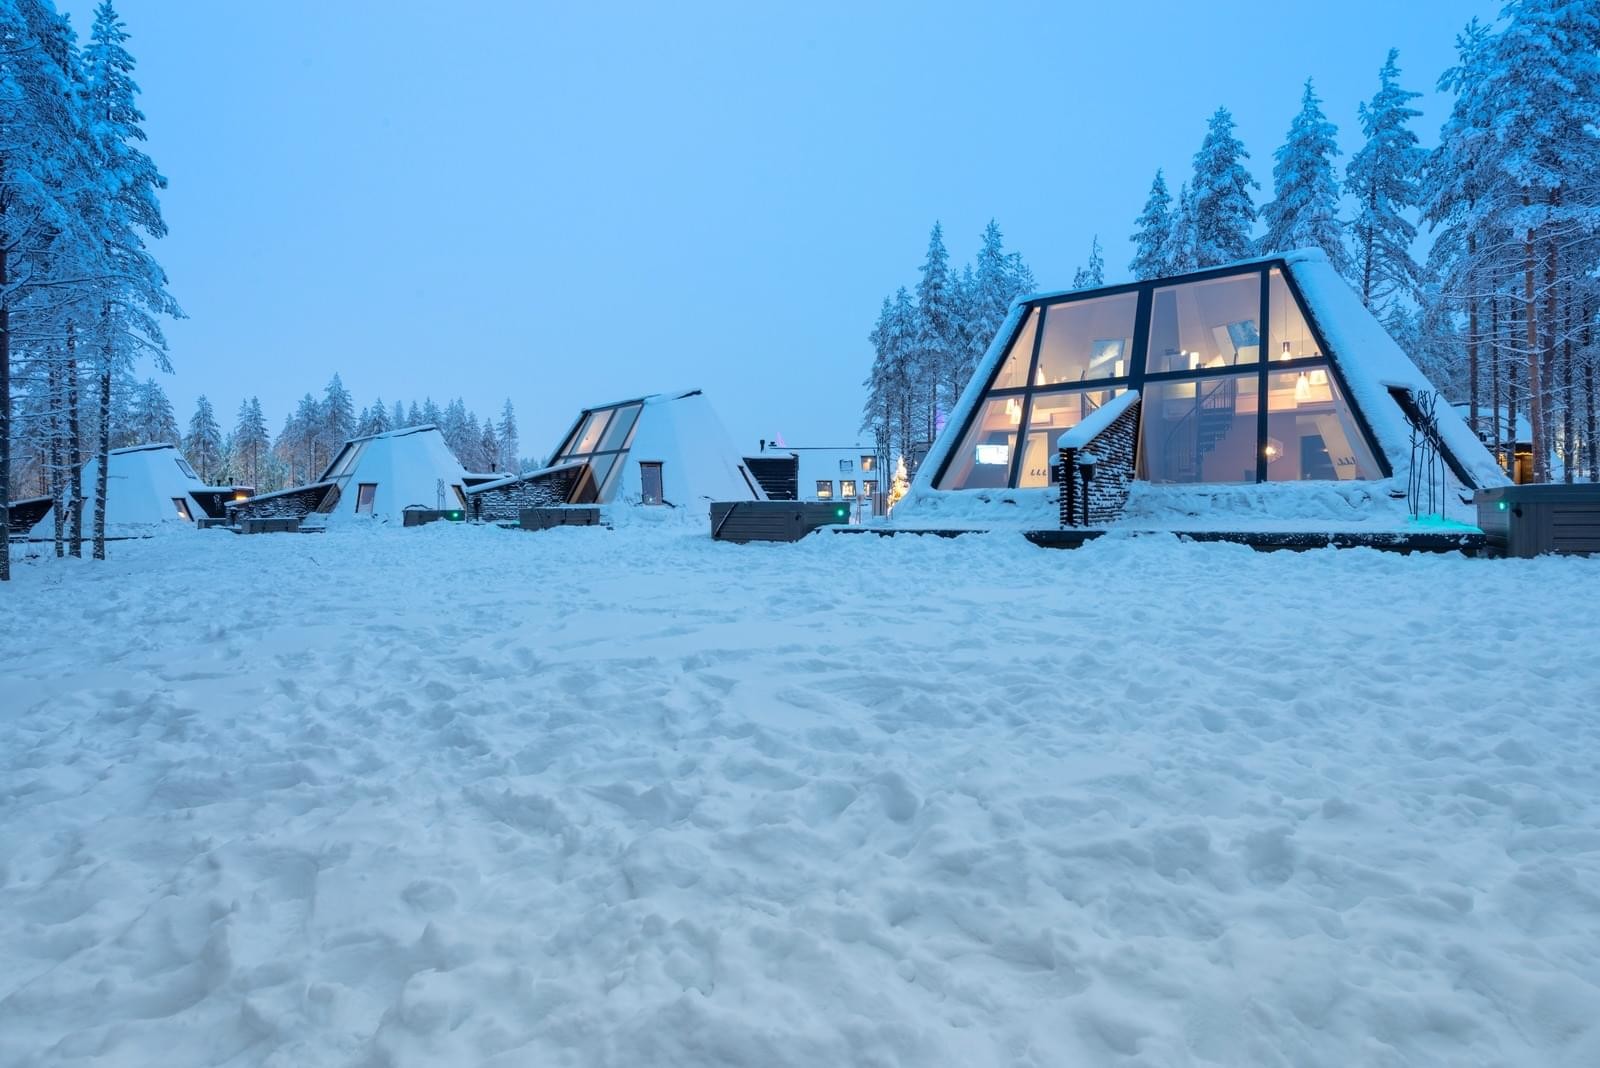  Snowman World Glass Resort hotel in Finland